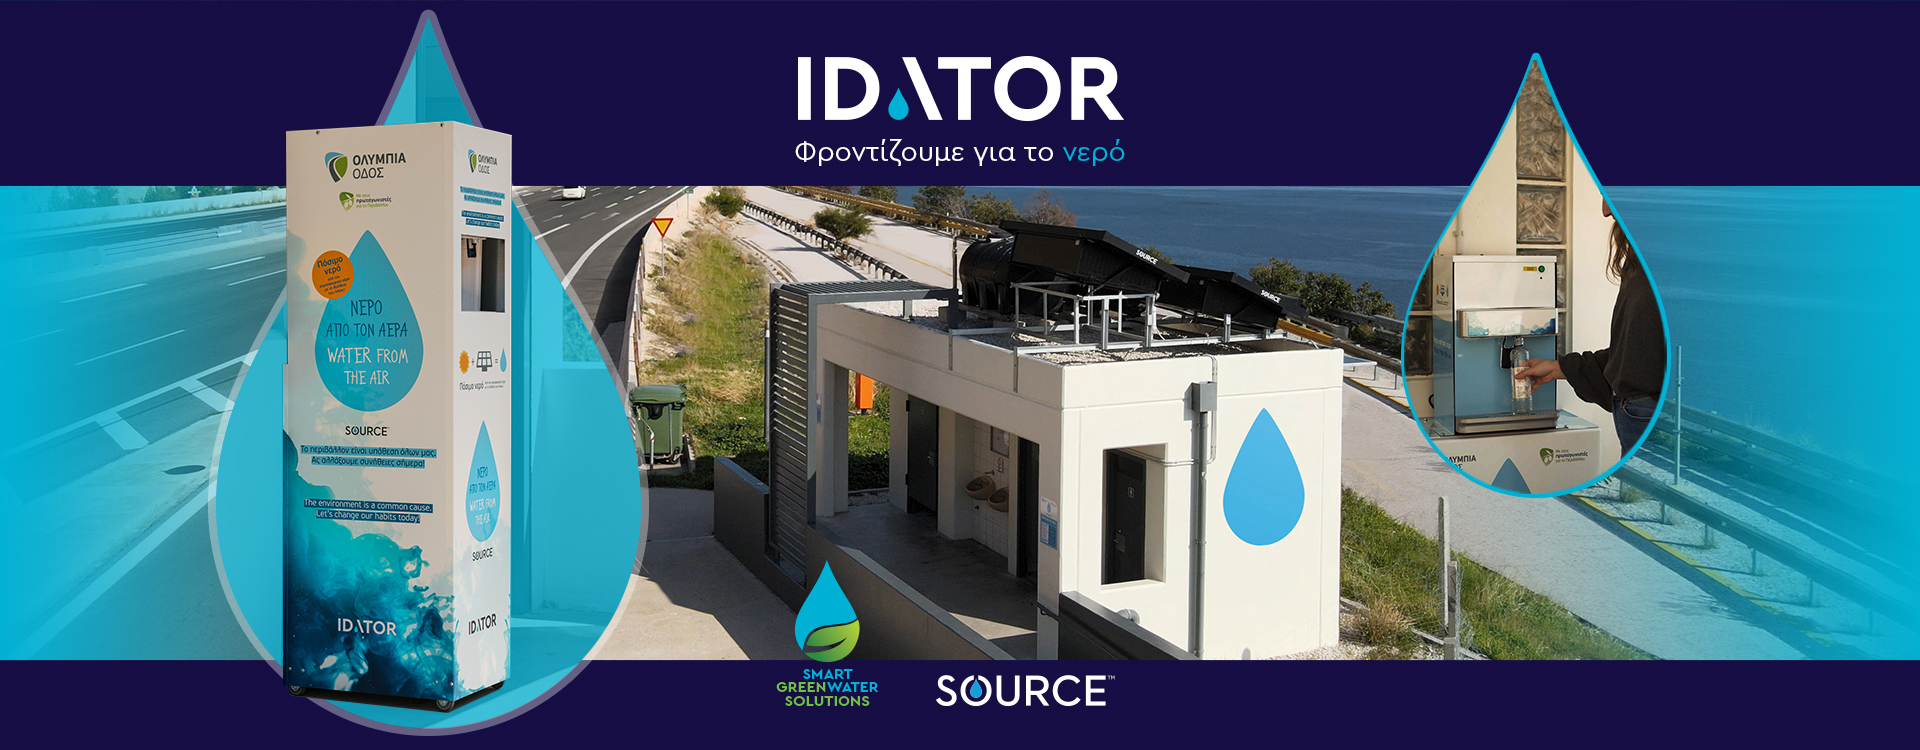 Idator – Ολυμπία Οδός: εγκατάσταση SOURCE σε 10 ακόμα σταθμούς